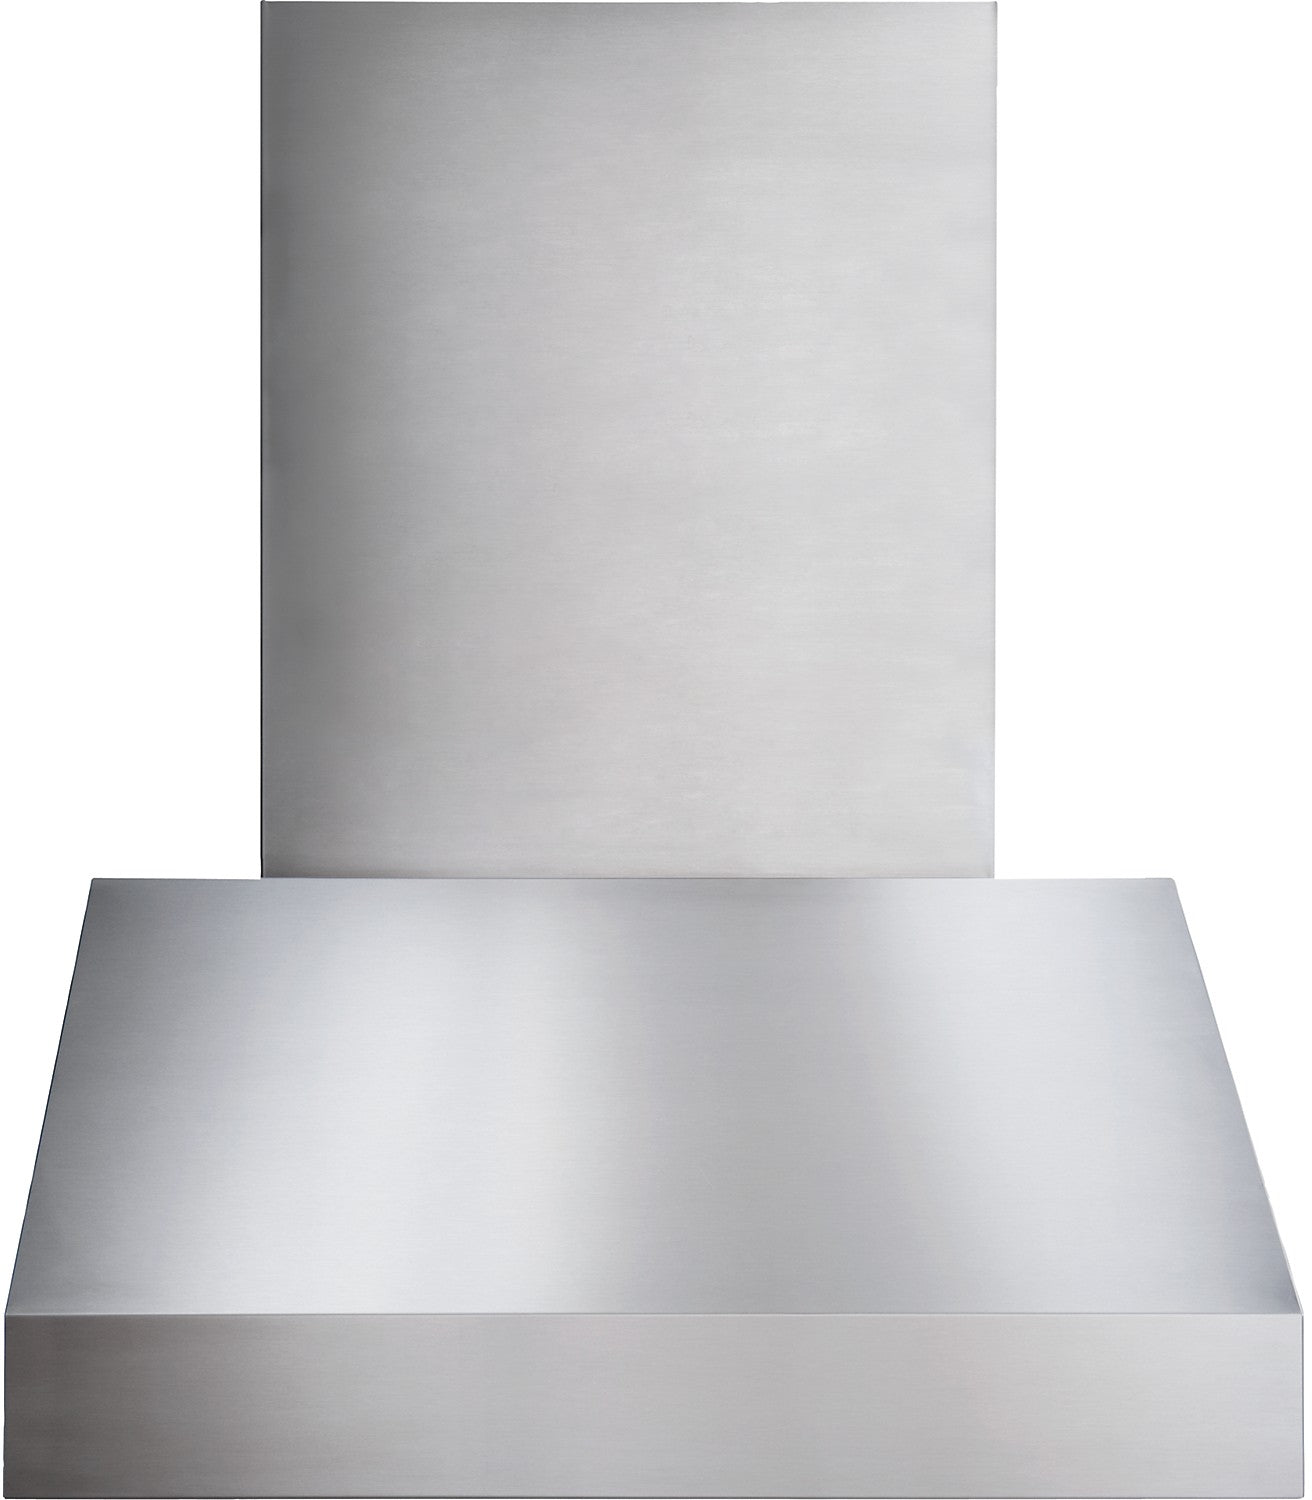 BROAN-NuTone Bws1304ss Range Hood, 30-inch, Stainless Steel